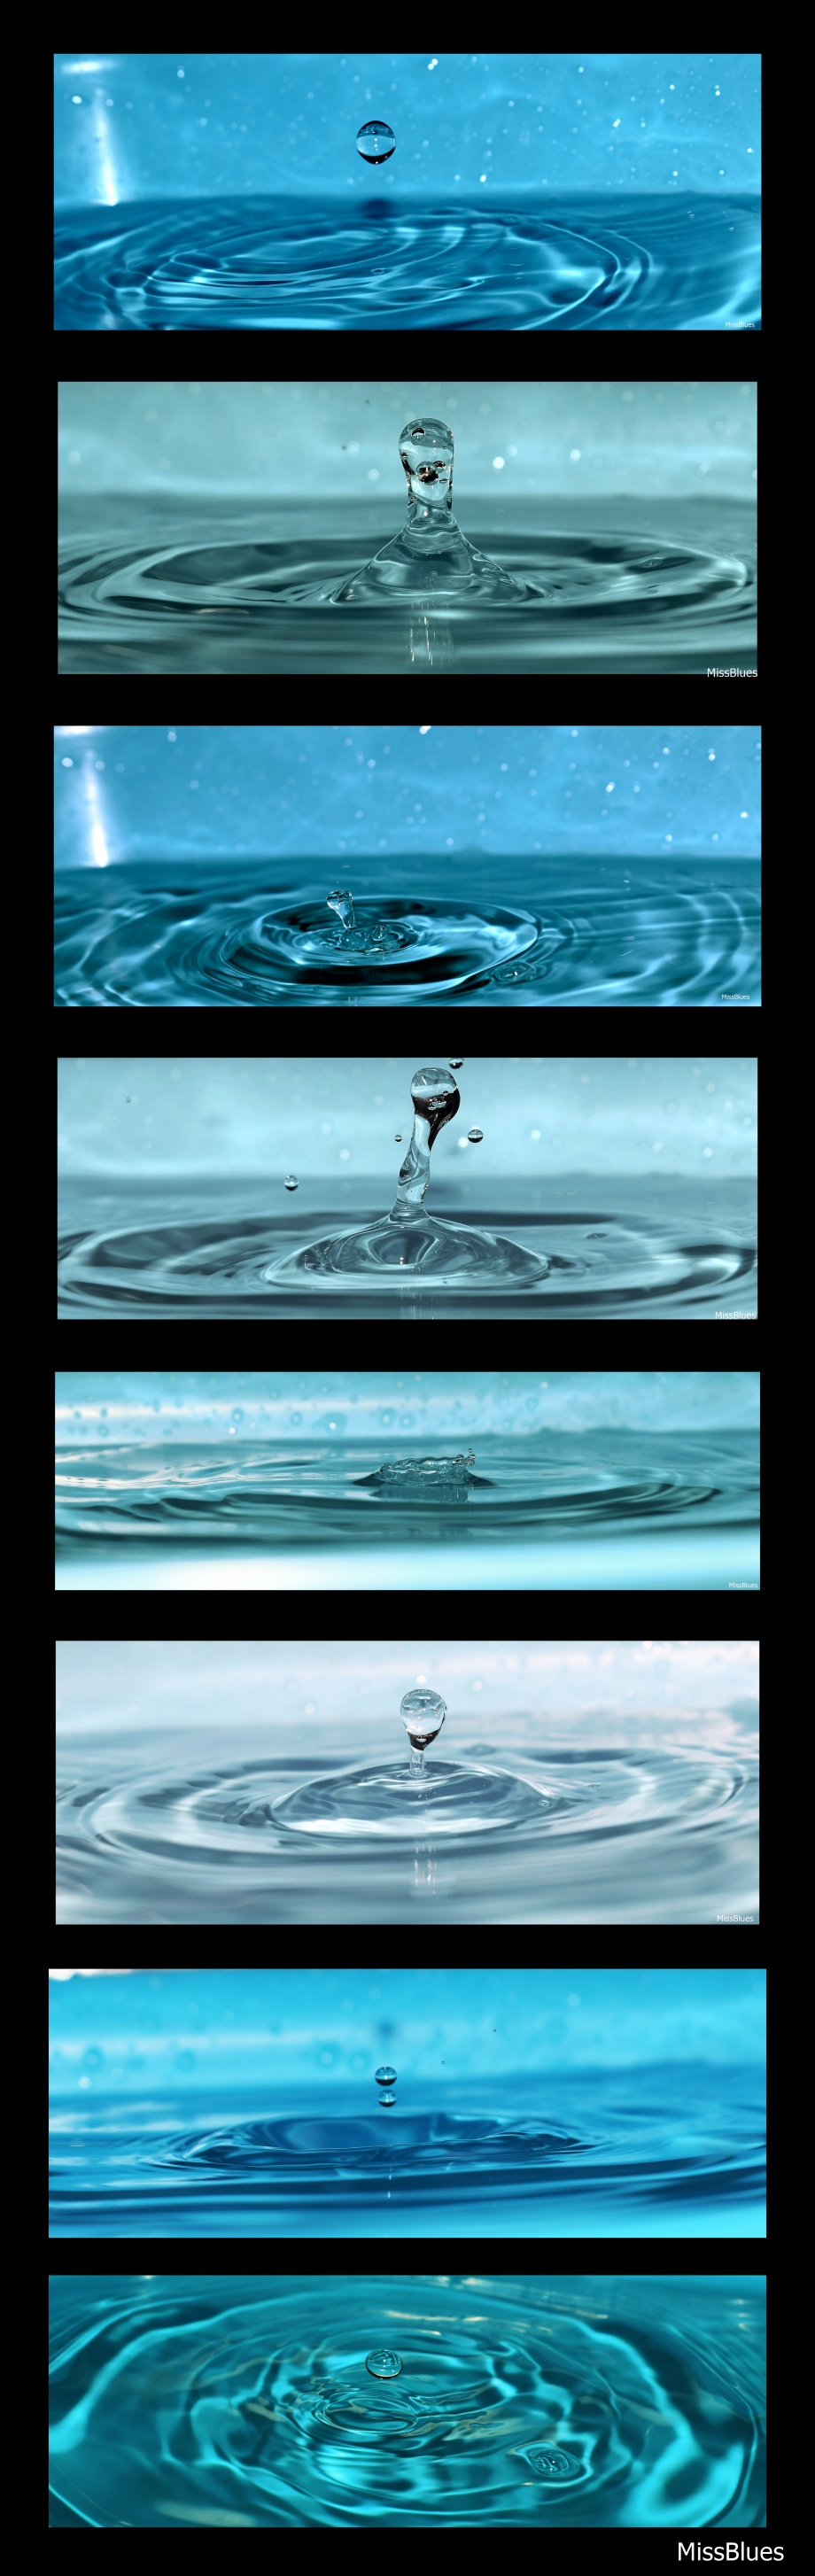 dropwater blue.jpg